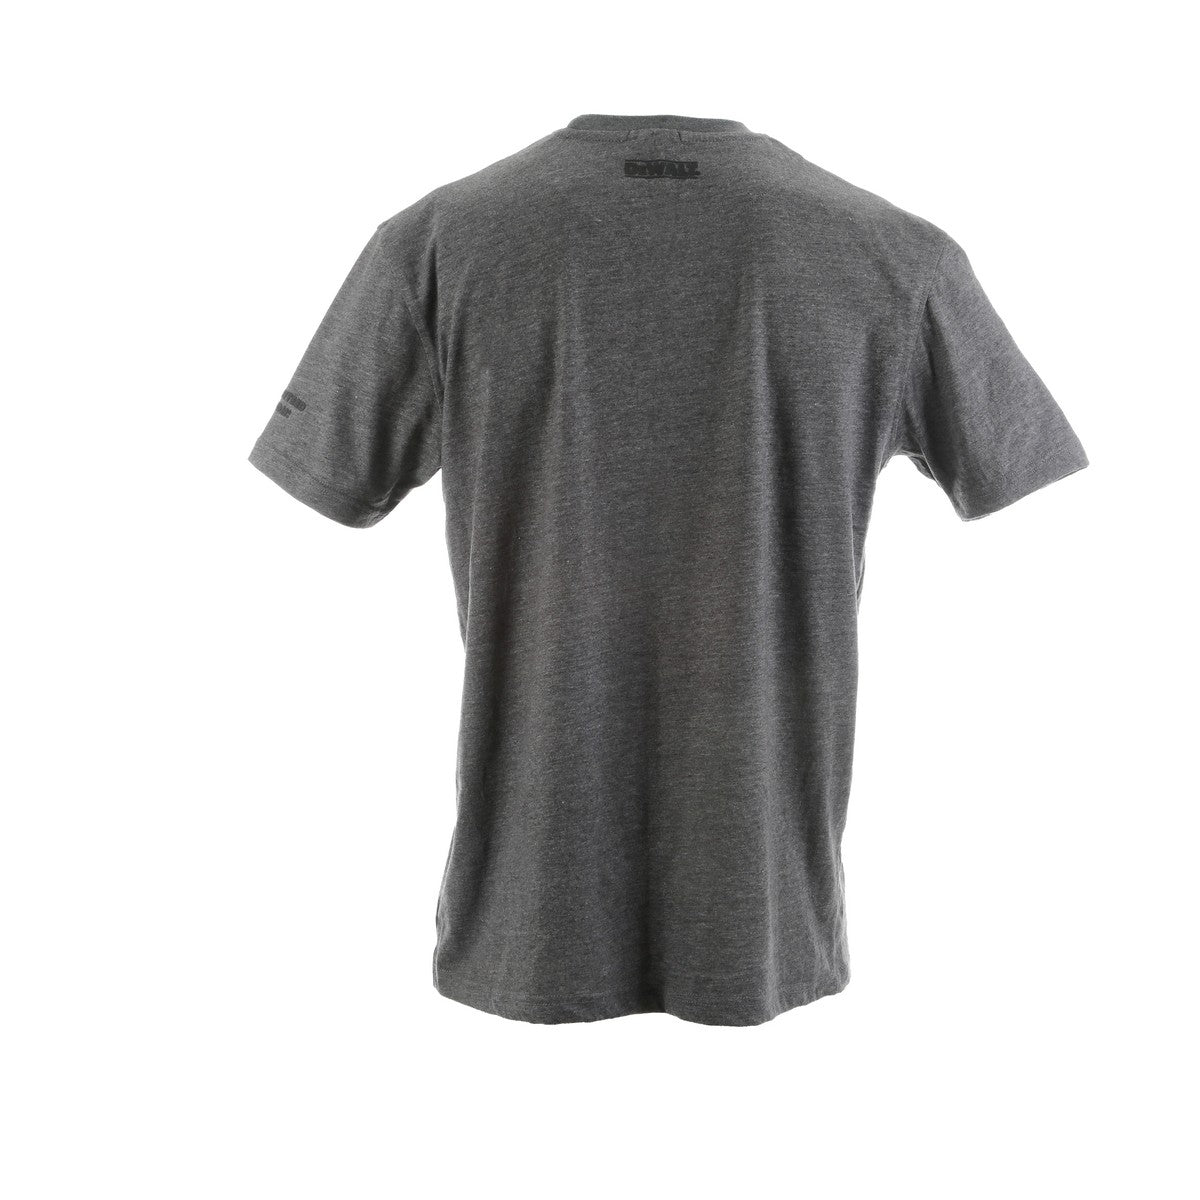 DeWalt Charcoal Grey T-Shirt